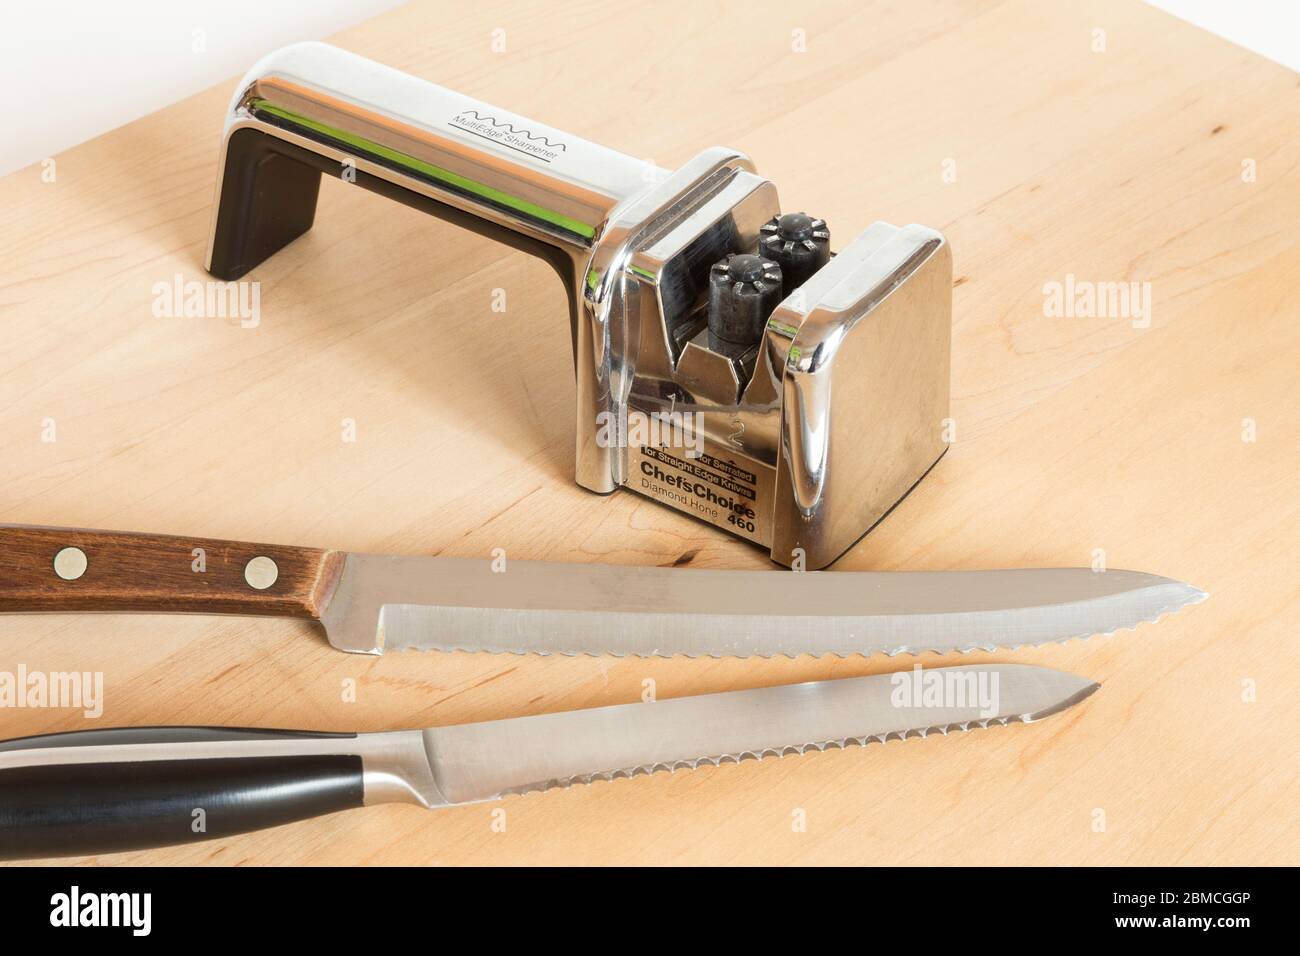 https://c8.alamy.com/comp/2BMCGGP/knife-sharpener-with-serrated-knives-still-life-usa-2BMCGGP.jpg